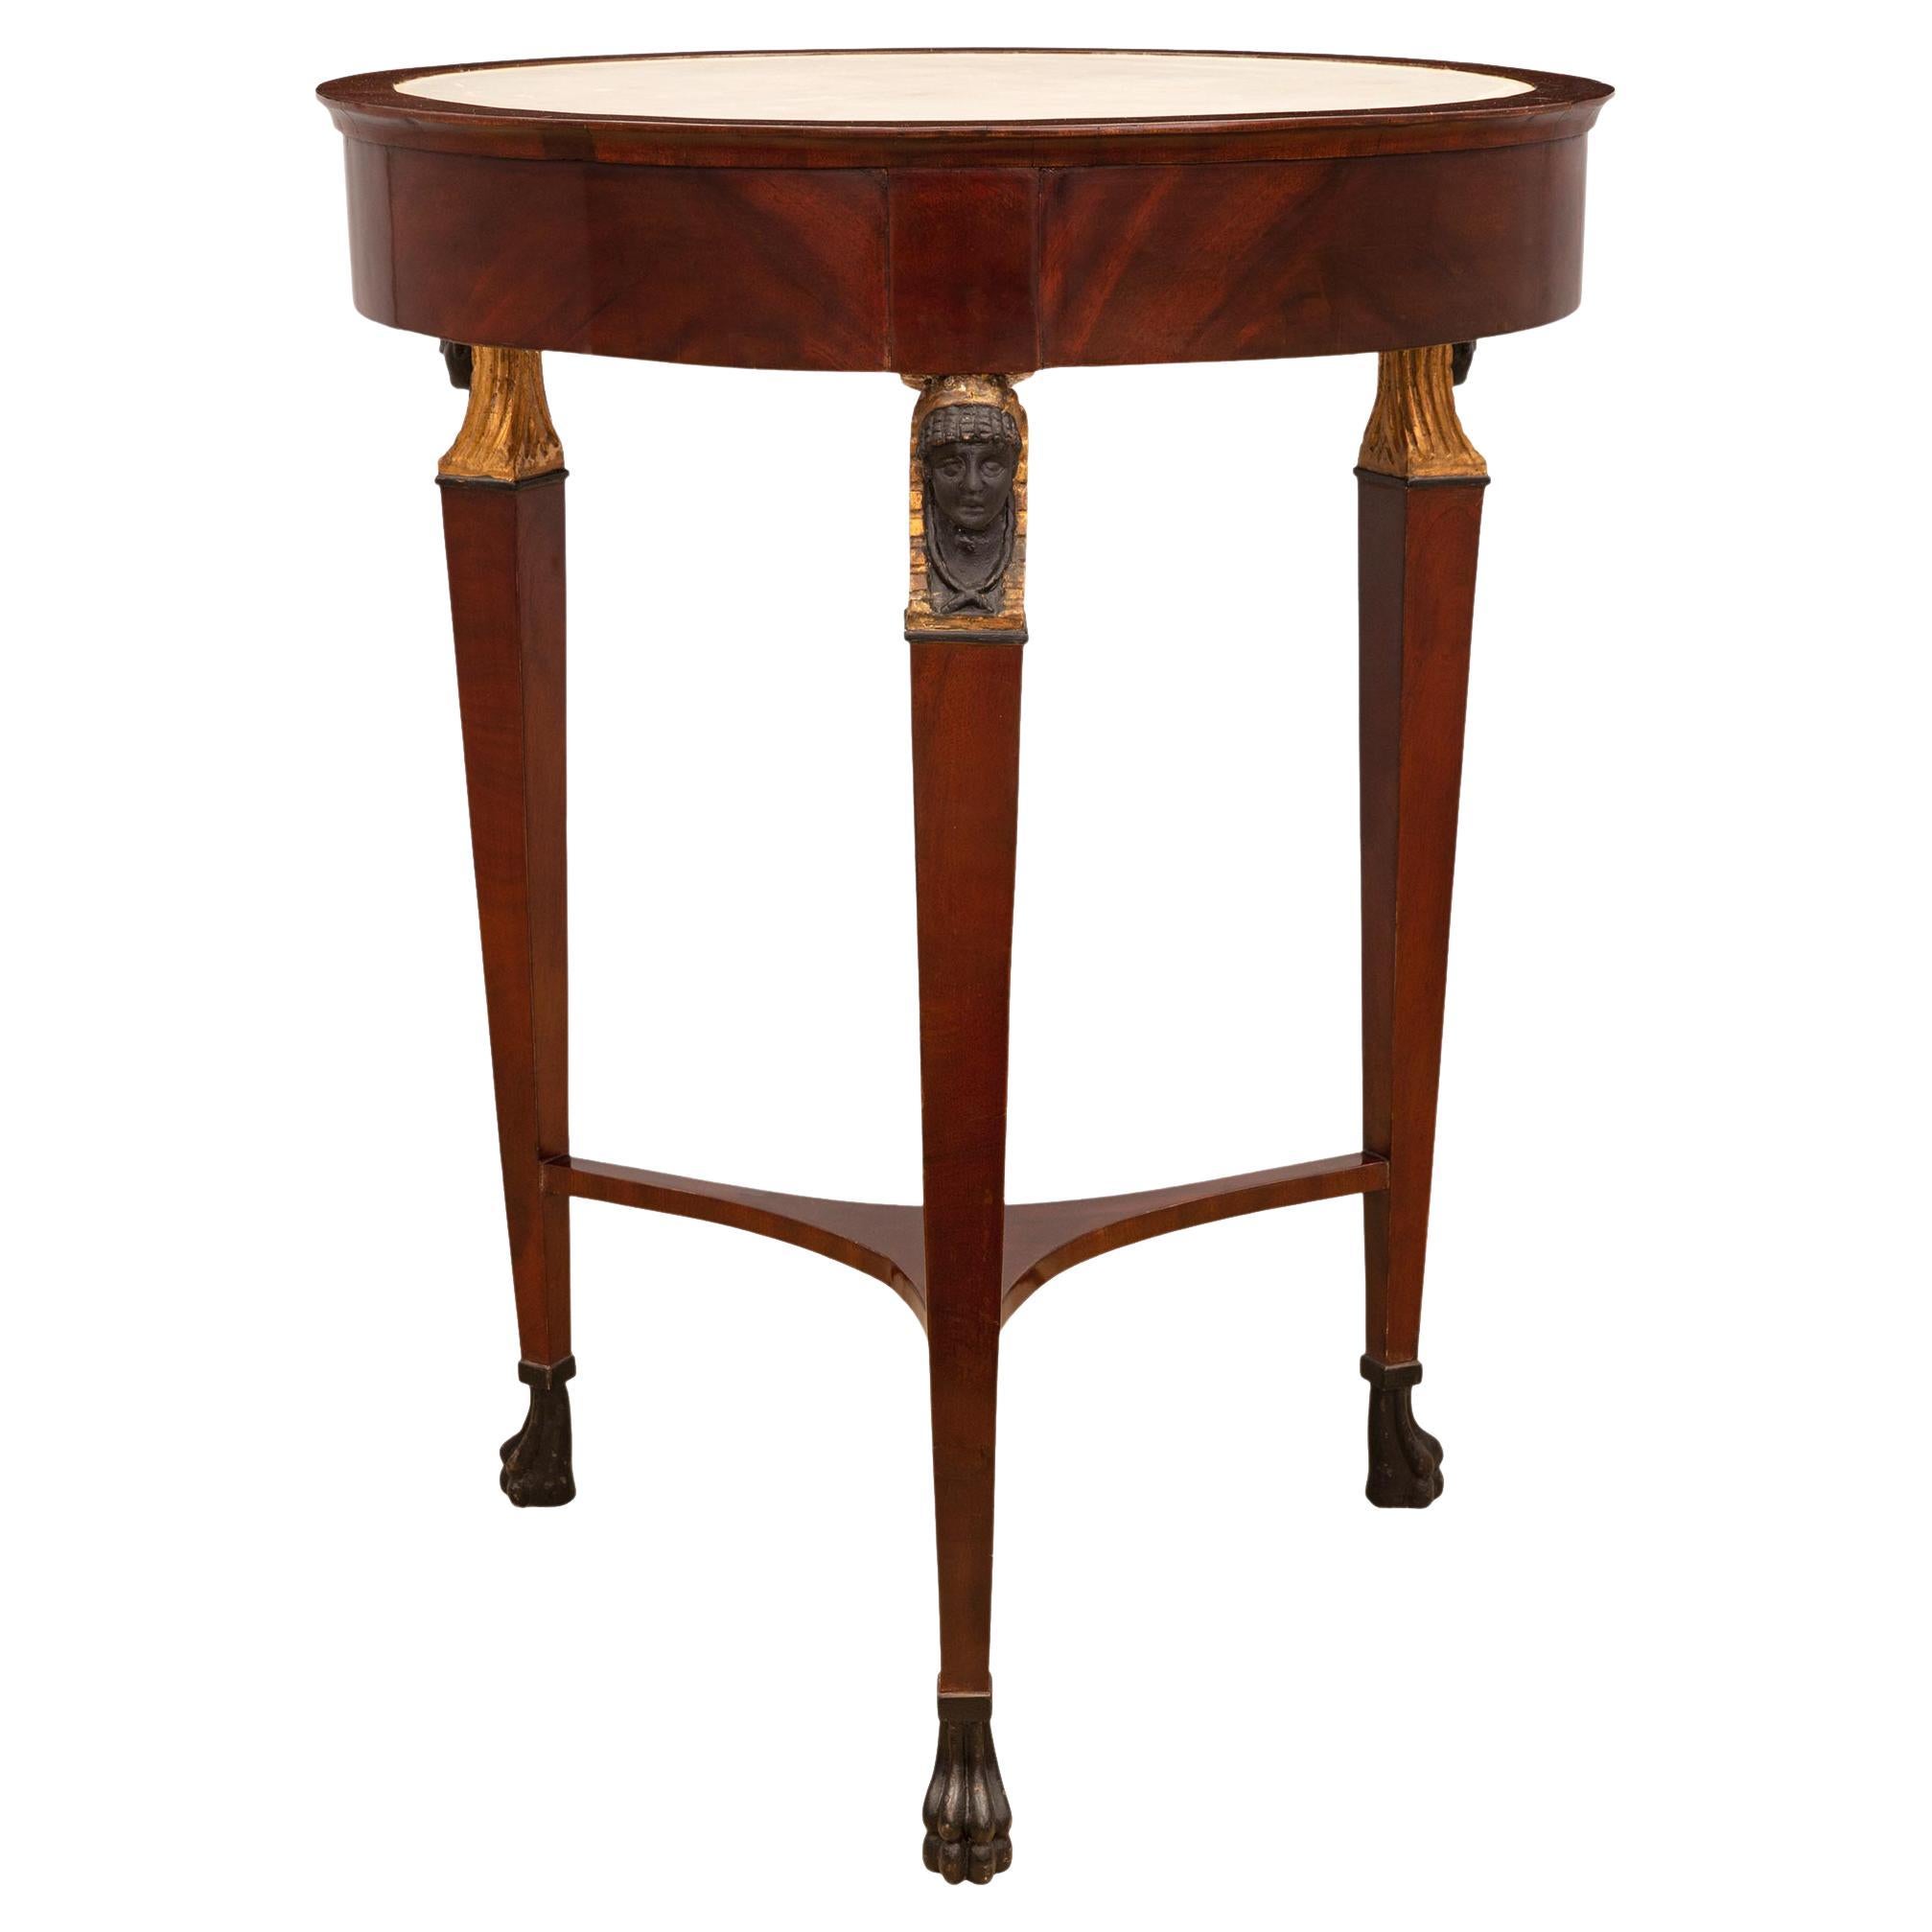 Italian Mid-19th Century Empire St. Circular Mahogany Center Table For Sale